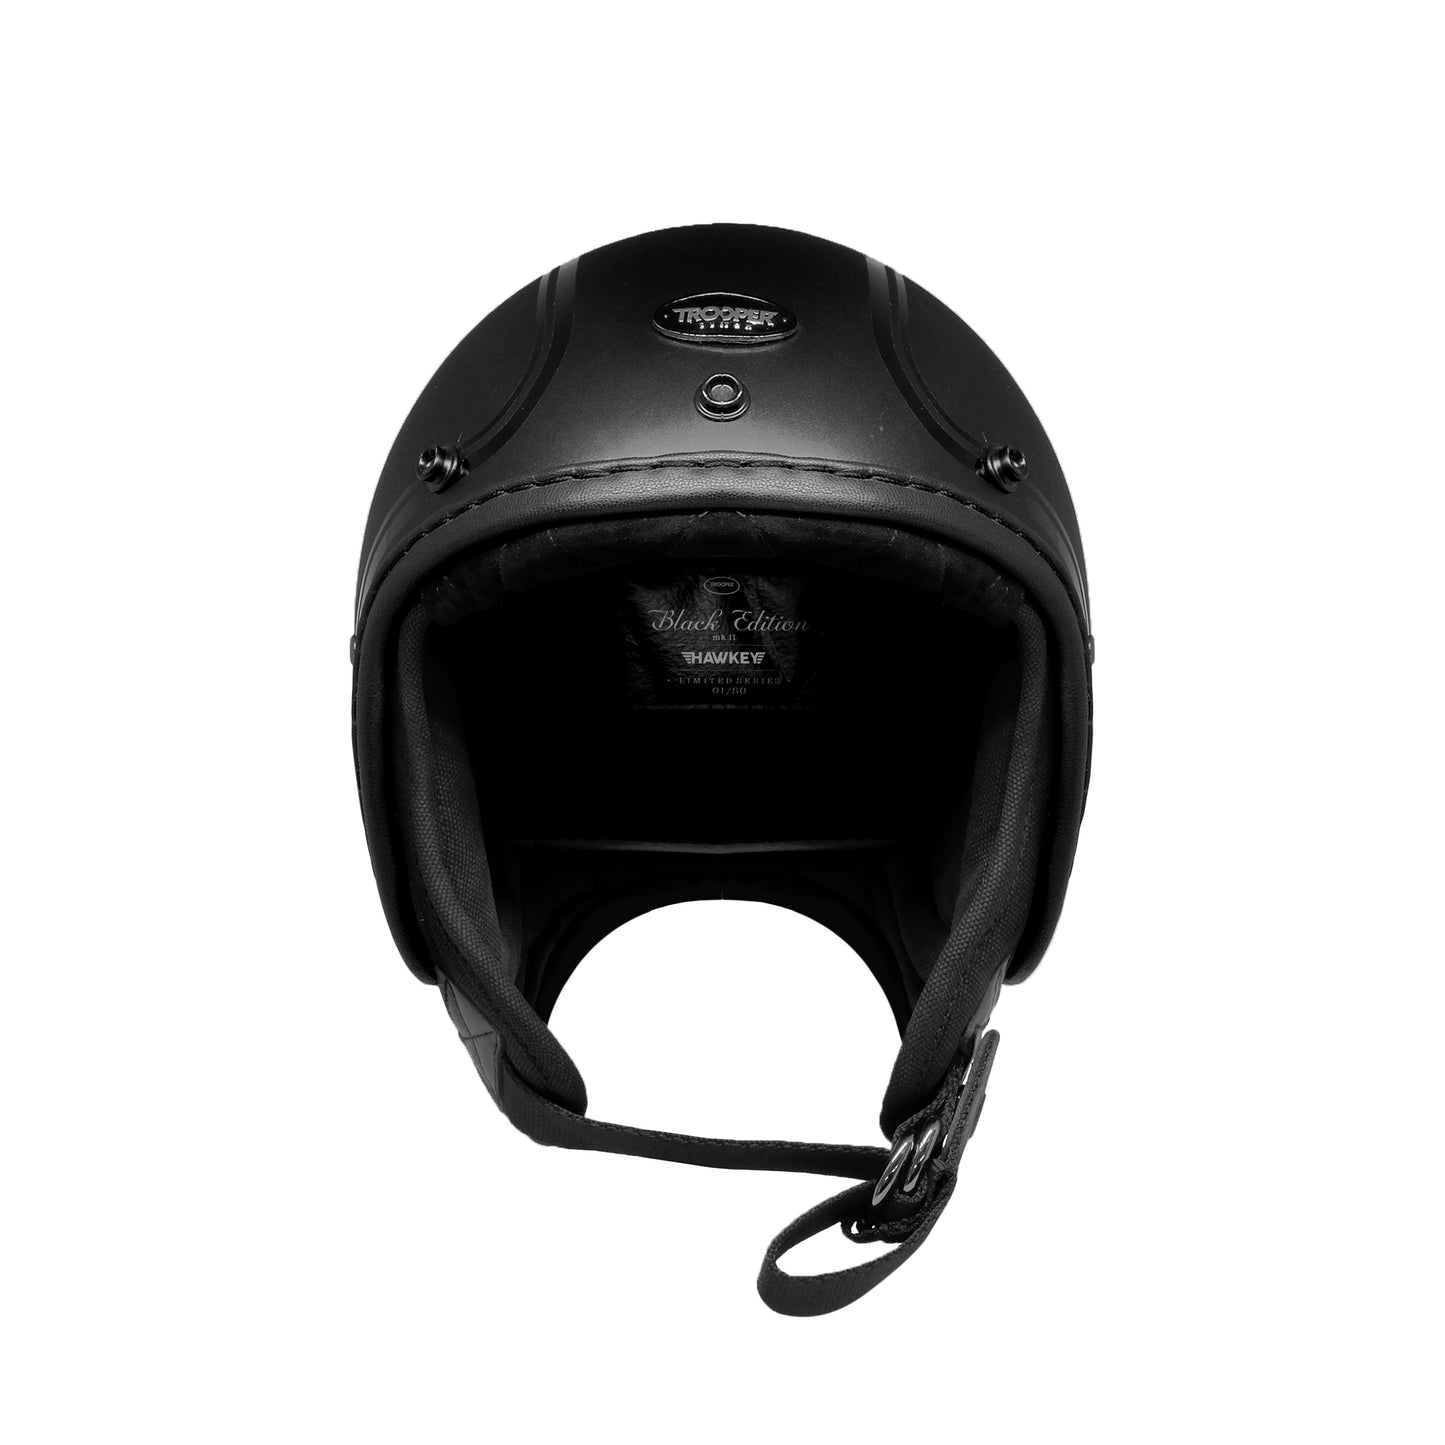 Hawkey Black Edition Helmet - Special Edition